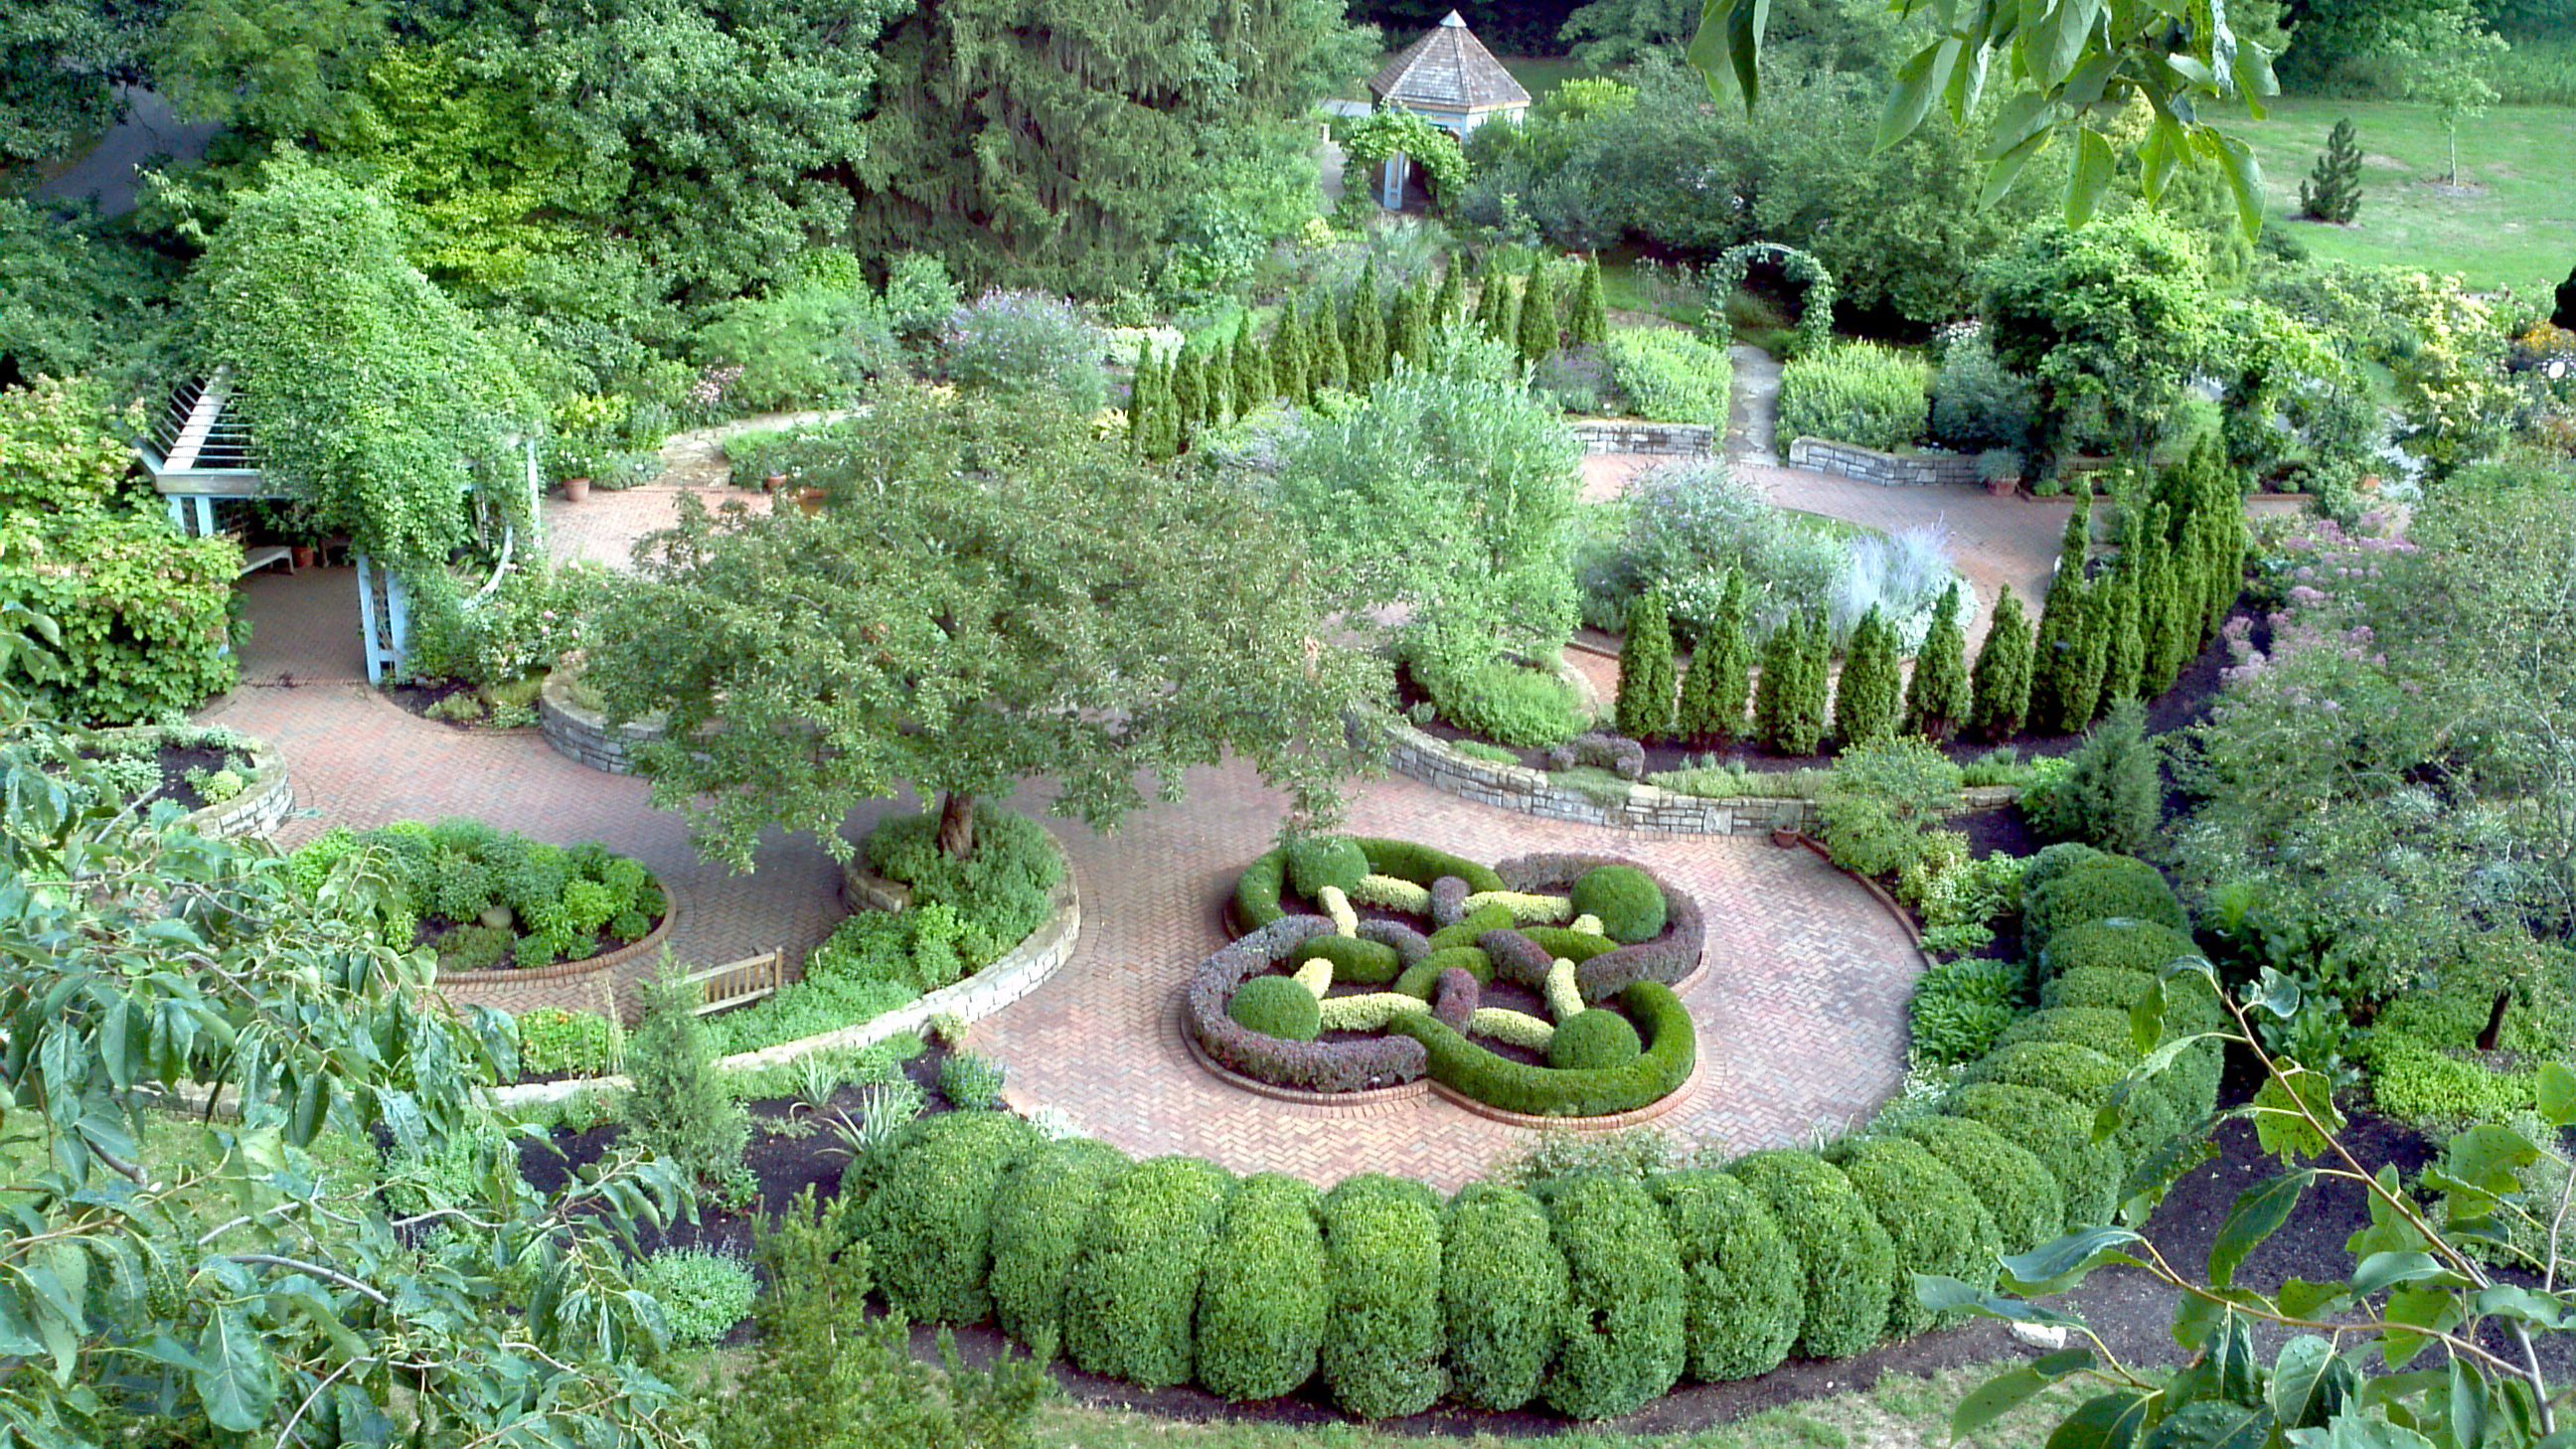 An aerial overview of Inniswood Metro Park's herb garden